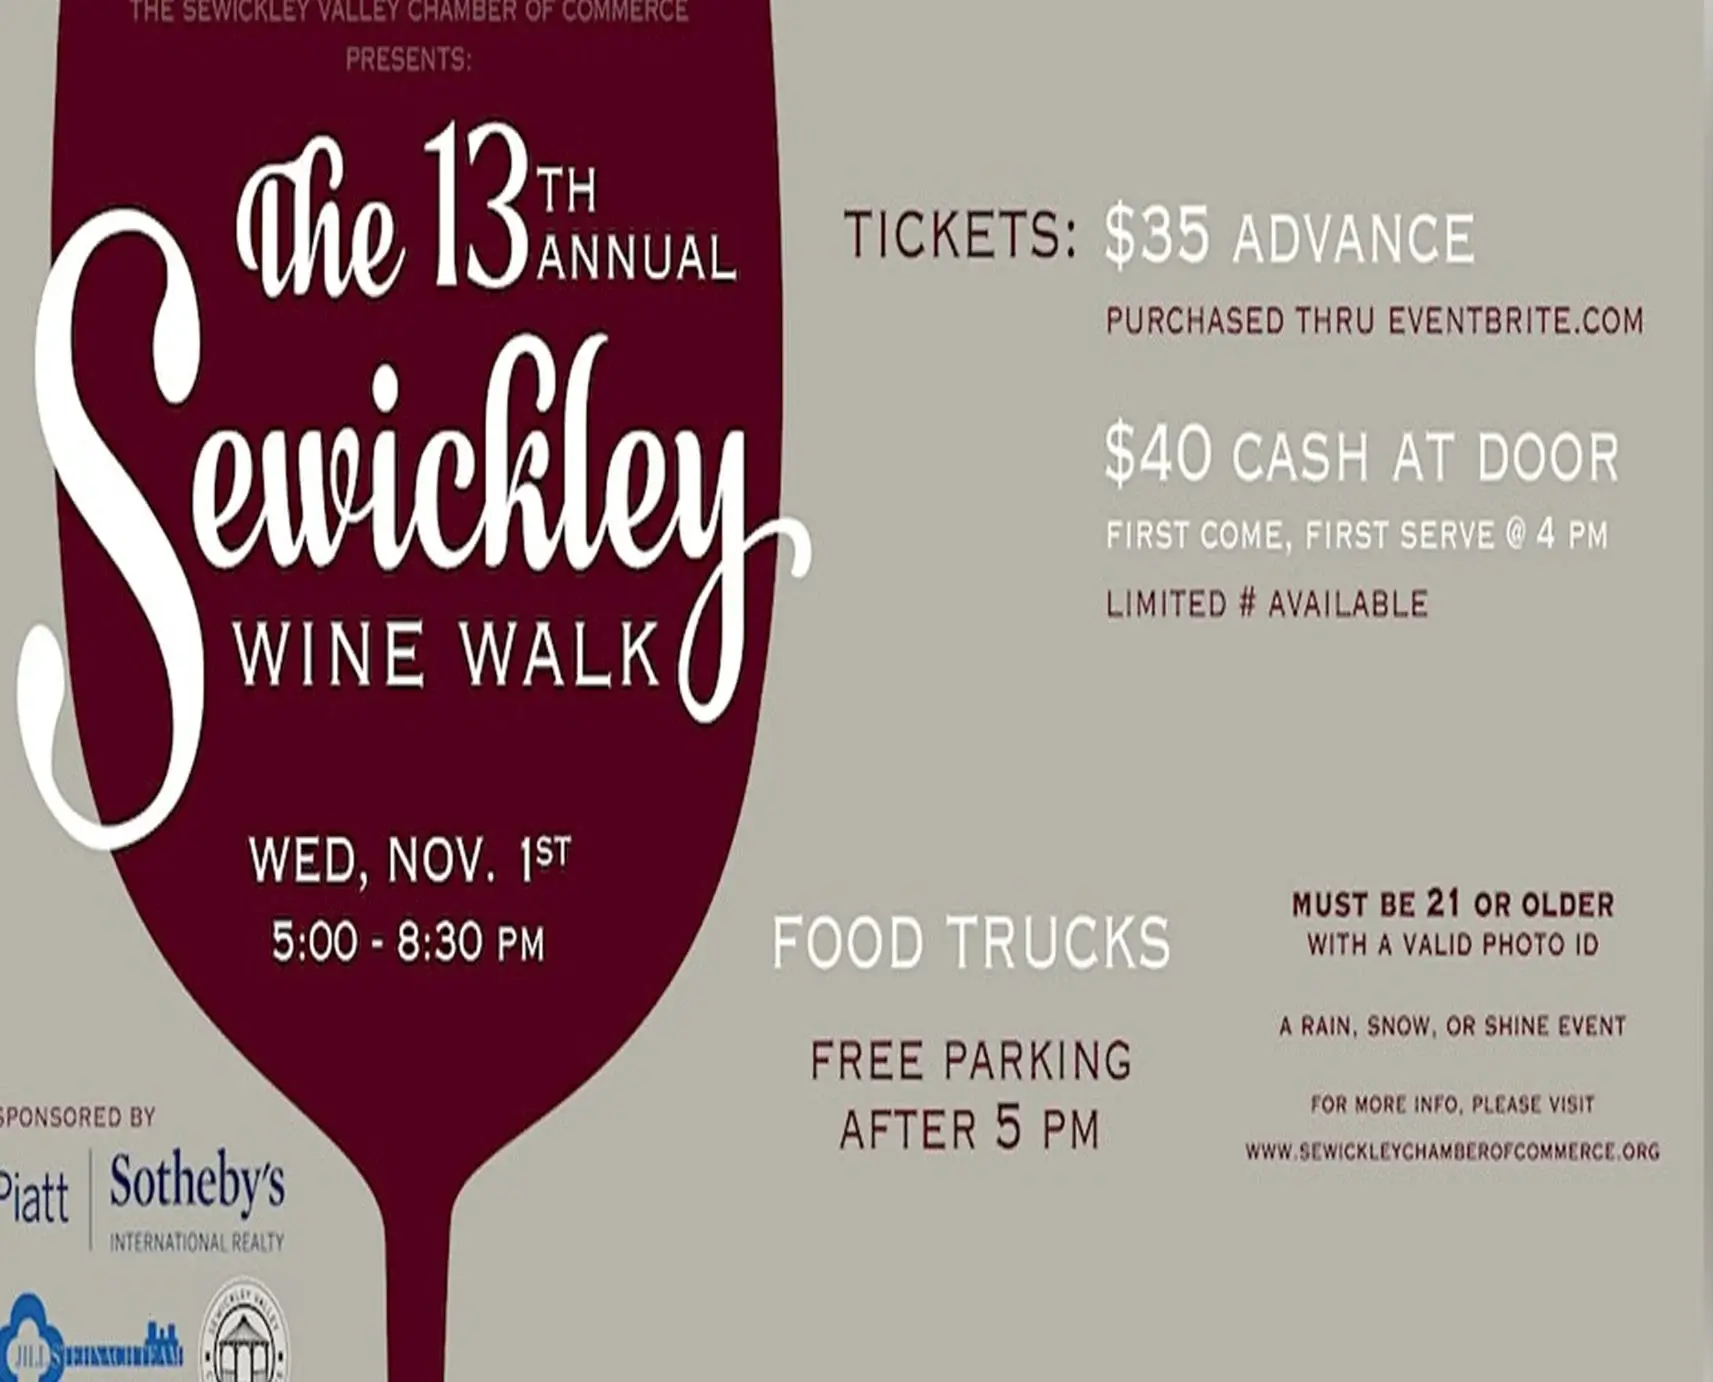 The 13th Annual Sewickley Wine Walk